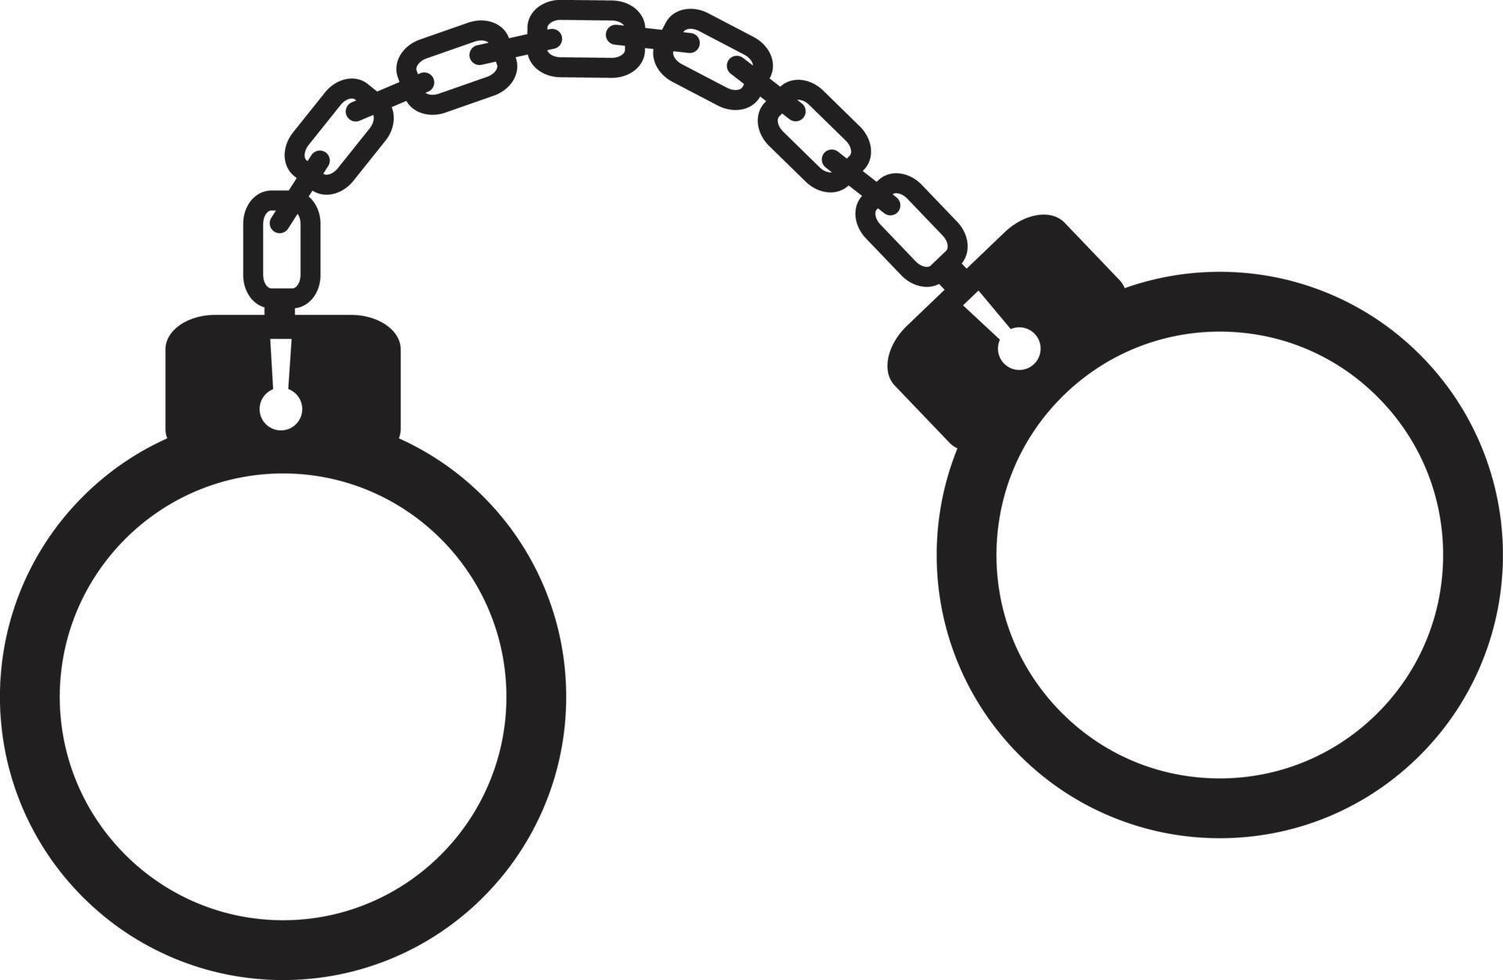 handcuffs icon. flat style. handcuffs symbol. vector